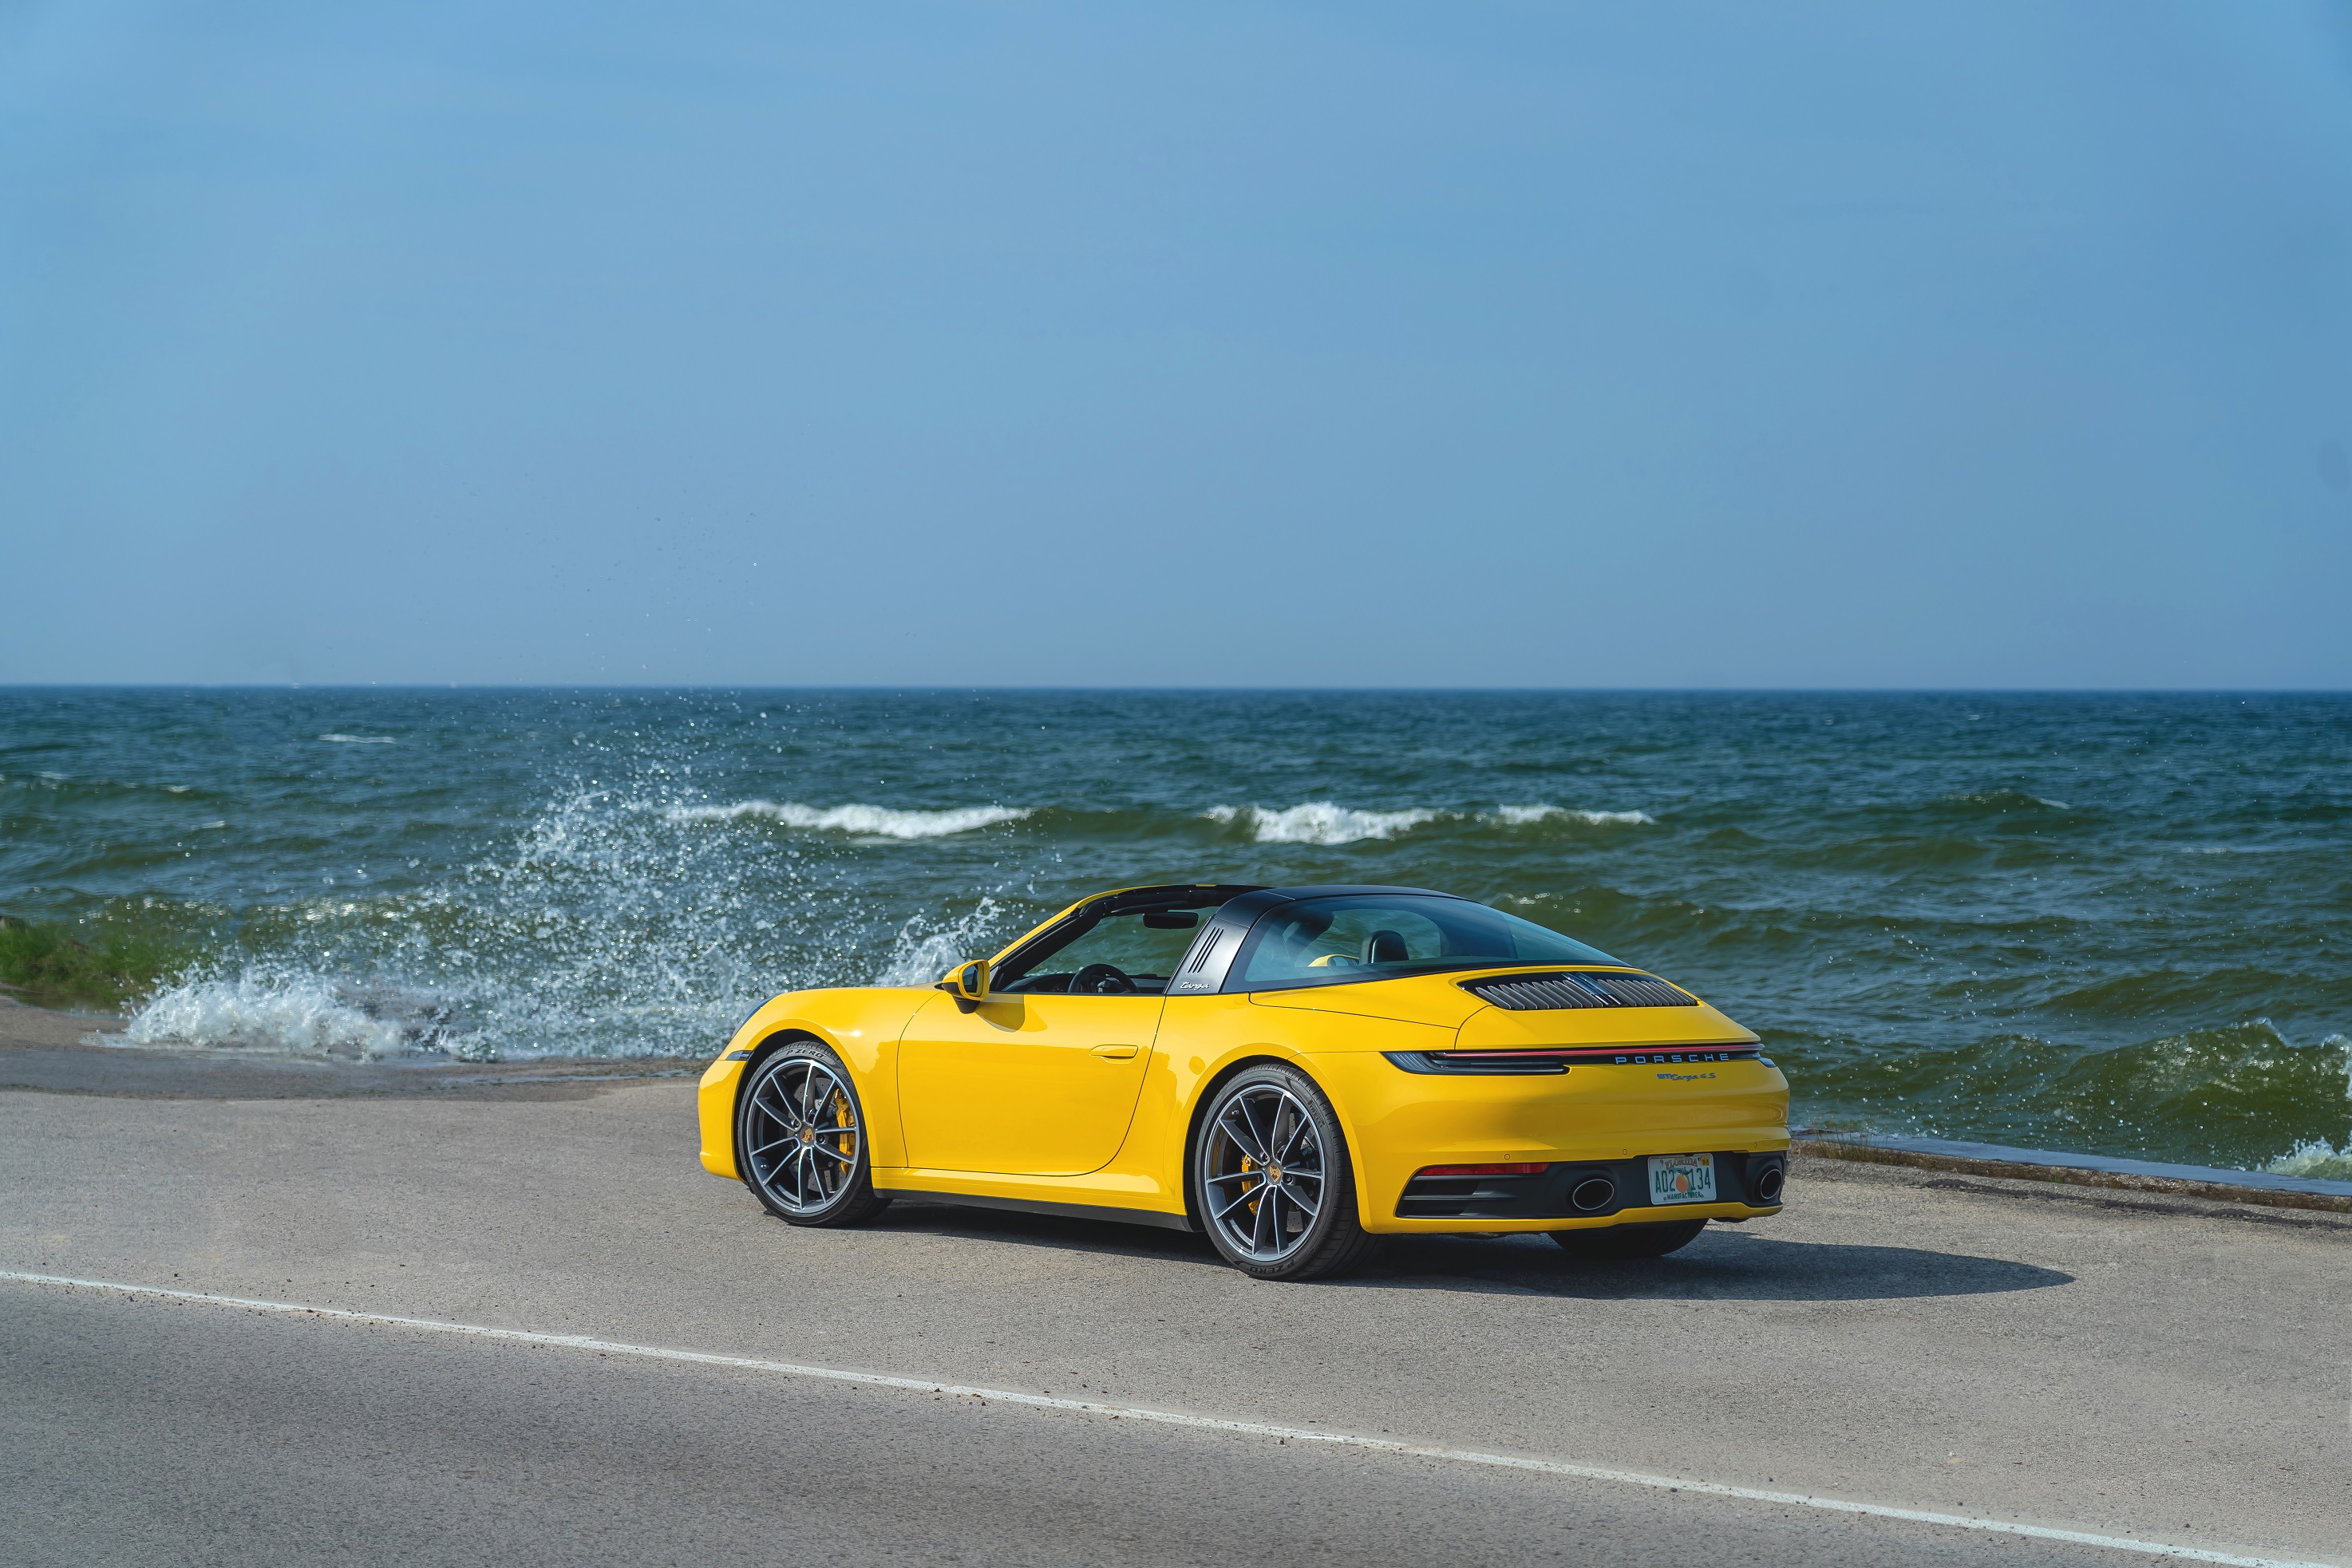 The 3/4 rear view of a yellow 2022 Porsche 911 Targa 4S by the sea